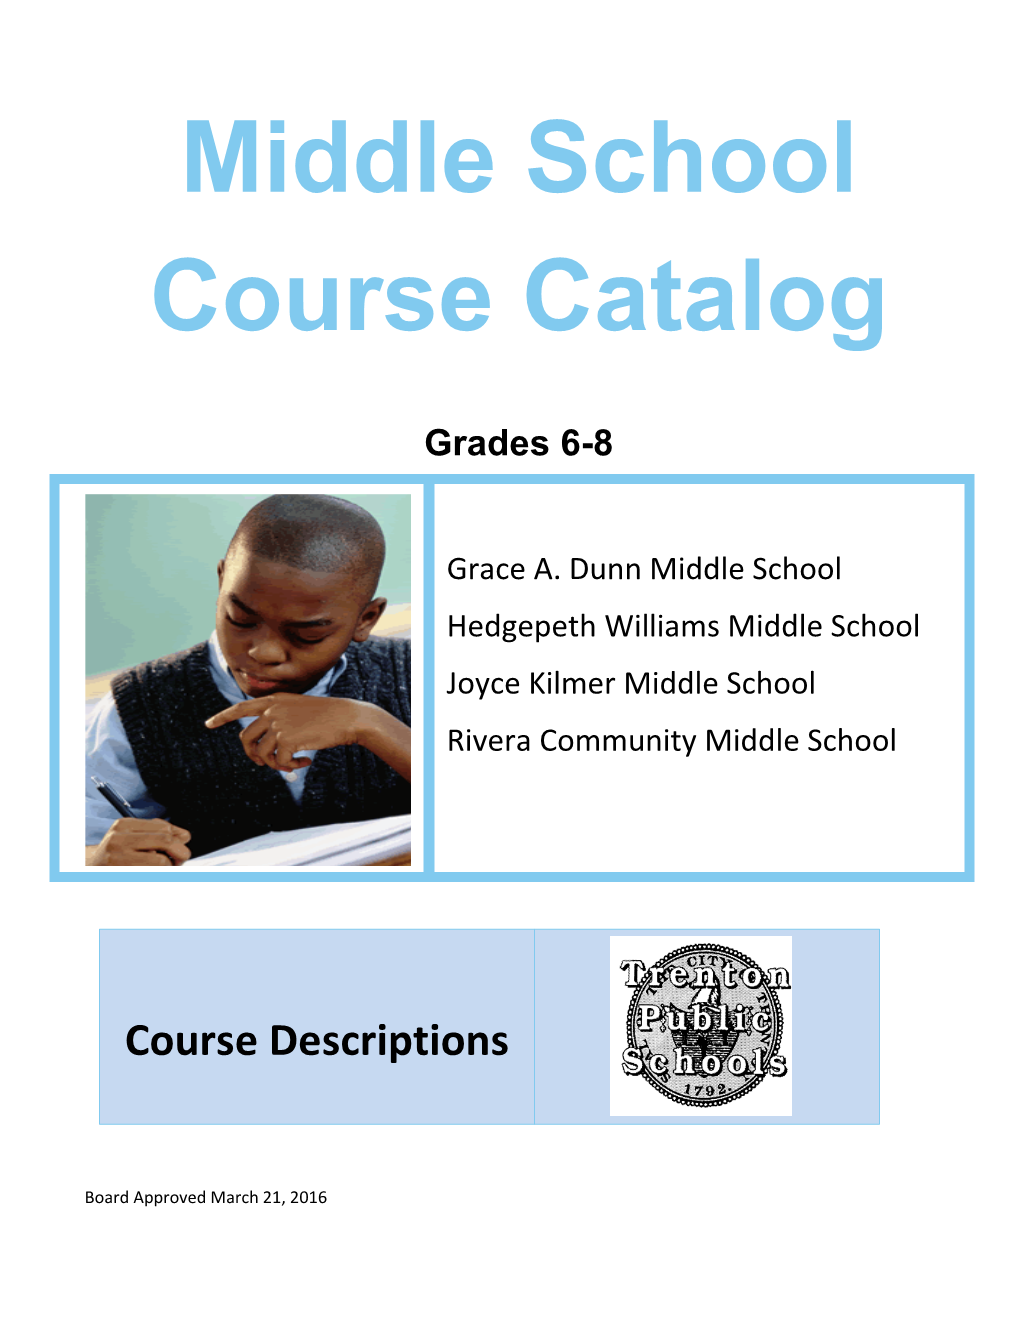 Middle School Course Catalog